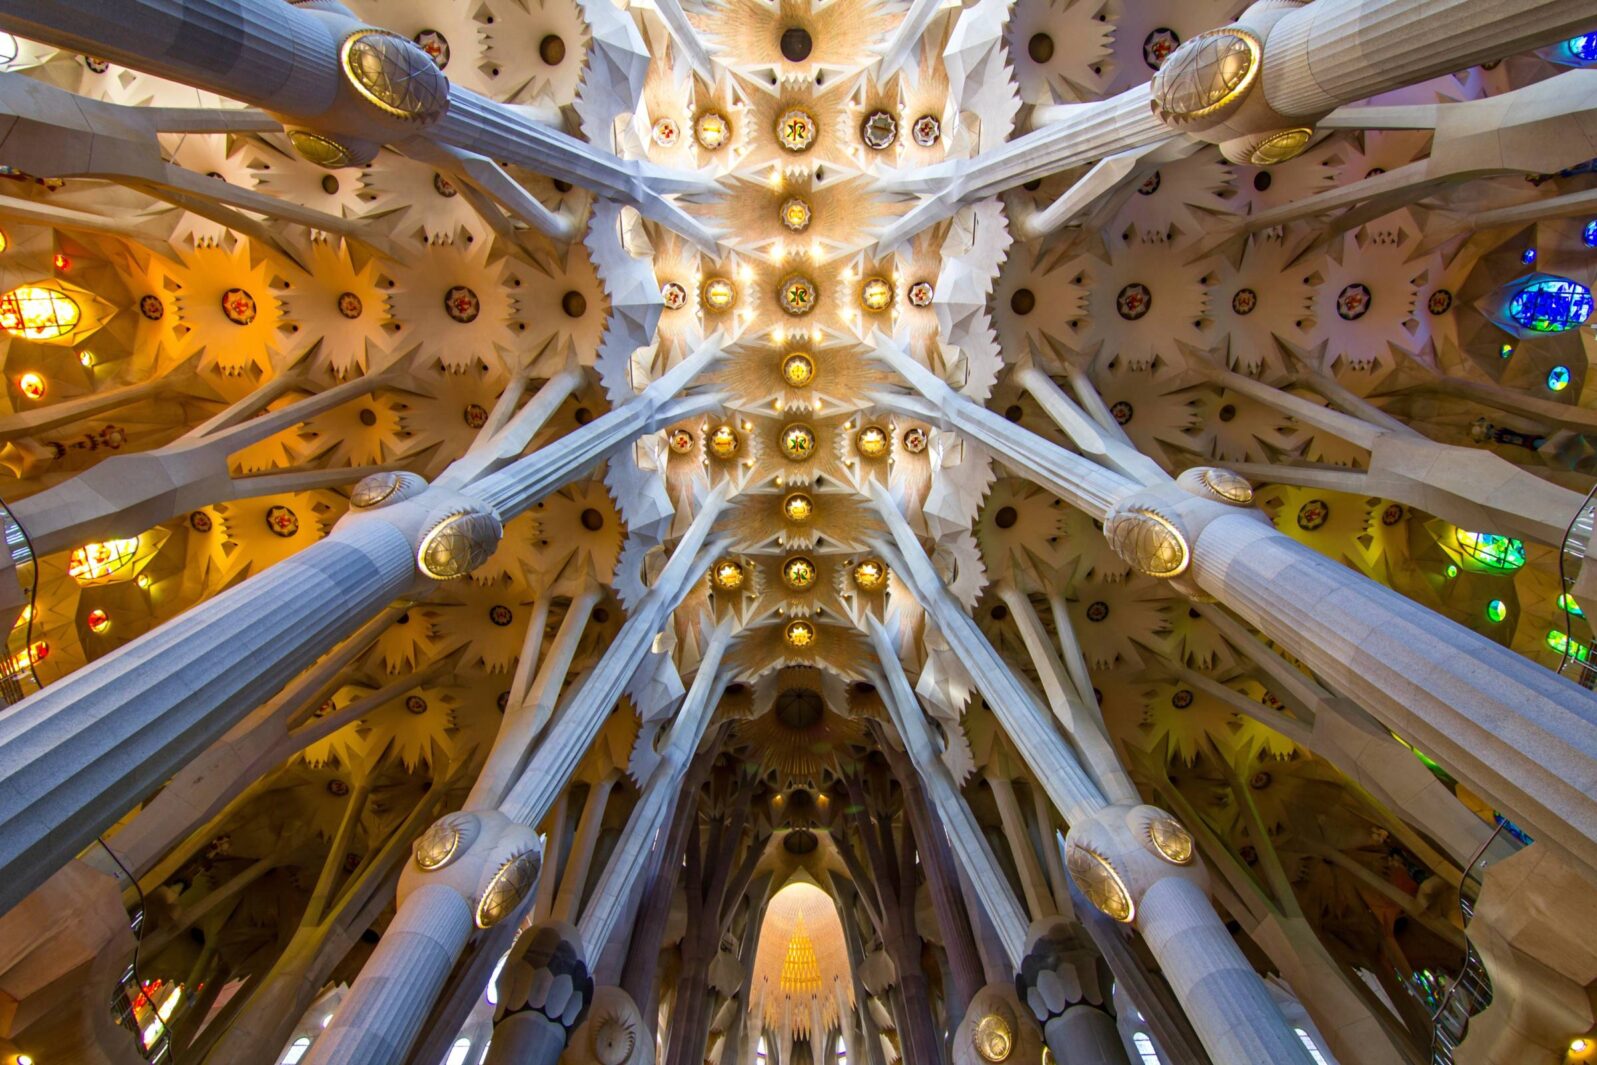 Spandrels within the interior arches of the Sagrada Familia